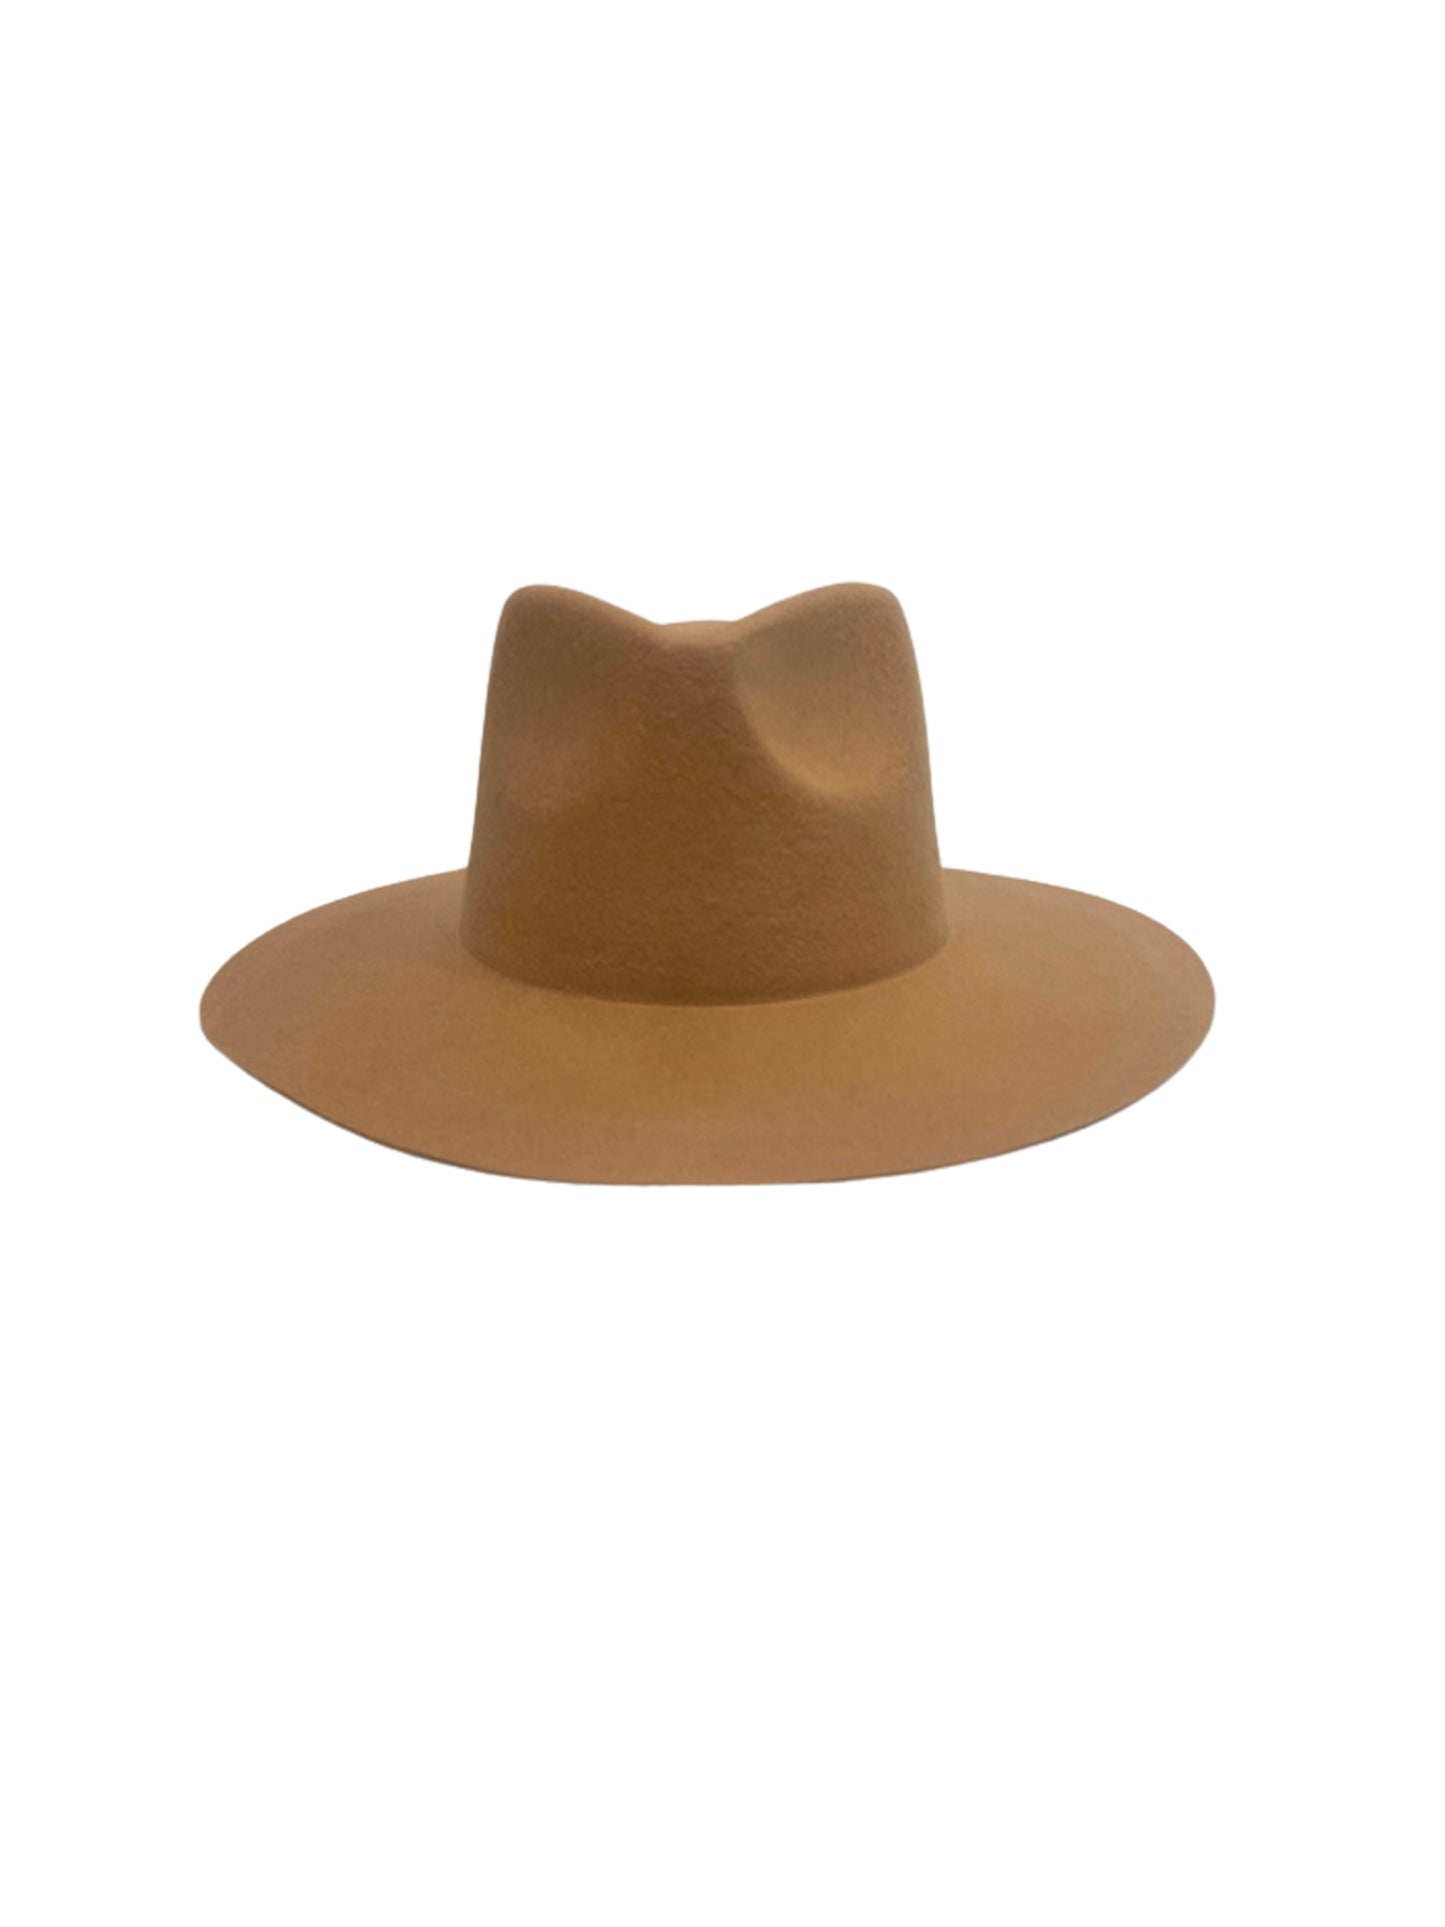 rancher hat camel front